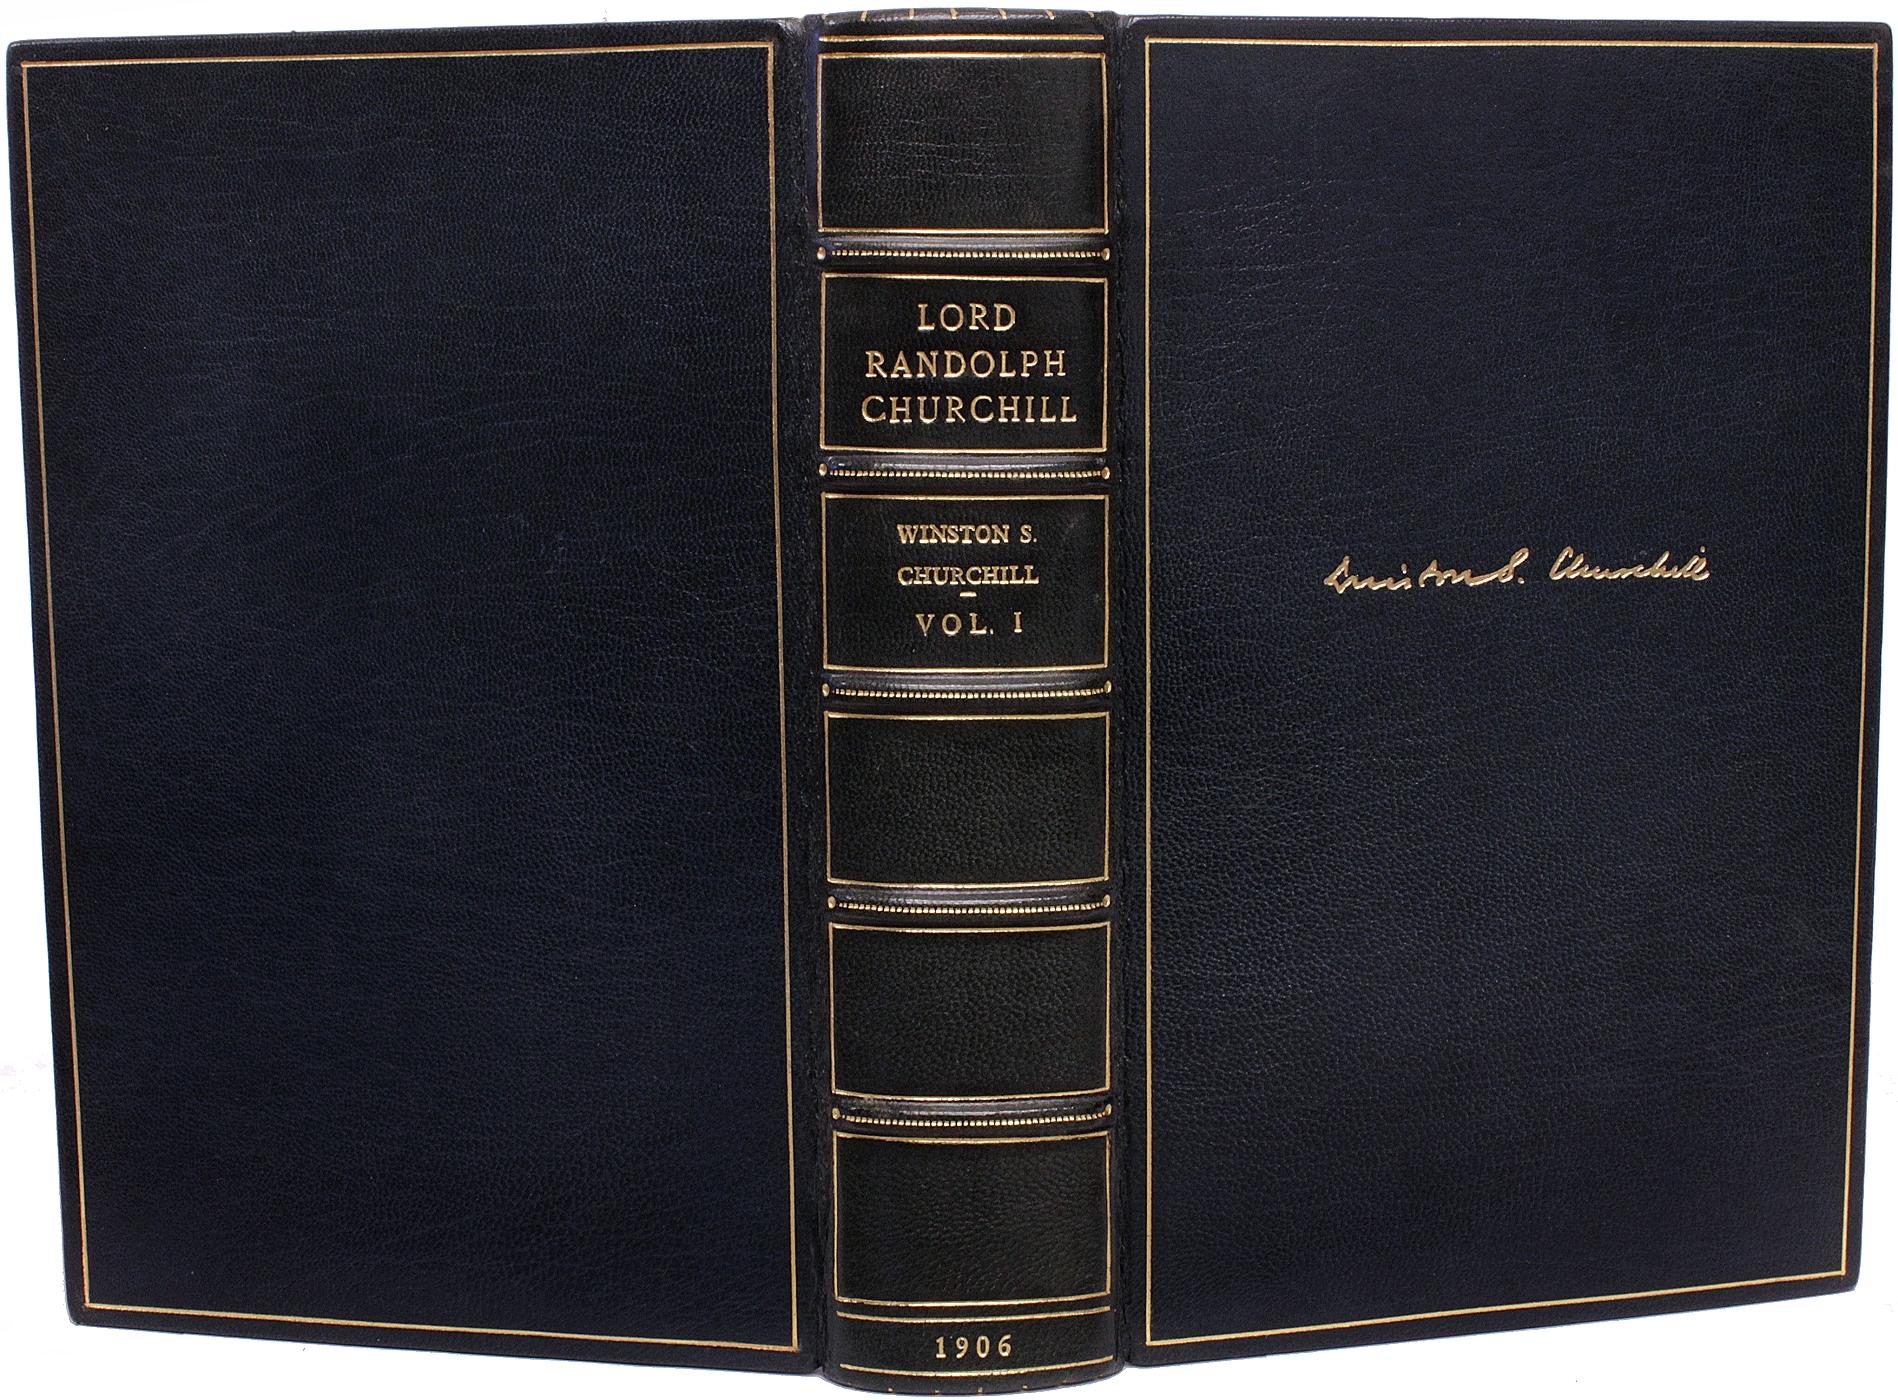 AUTOR: CHURCHILL, Winston. 

TITEL: Lord Randolph Churchill.

VERLAG: London: Hodder & Stoughton, 1906.

BESCHREIBUNG: ERSTE AUSGABE. 2 Bände, 8-11/16 